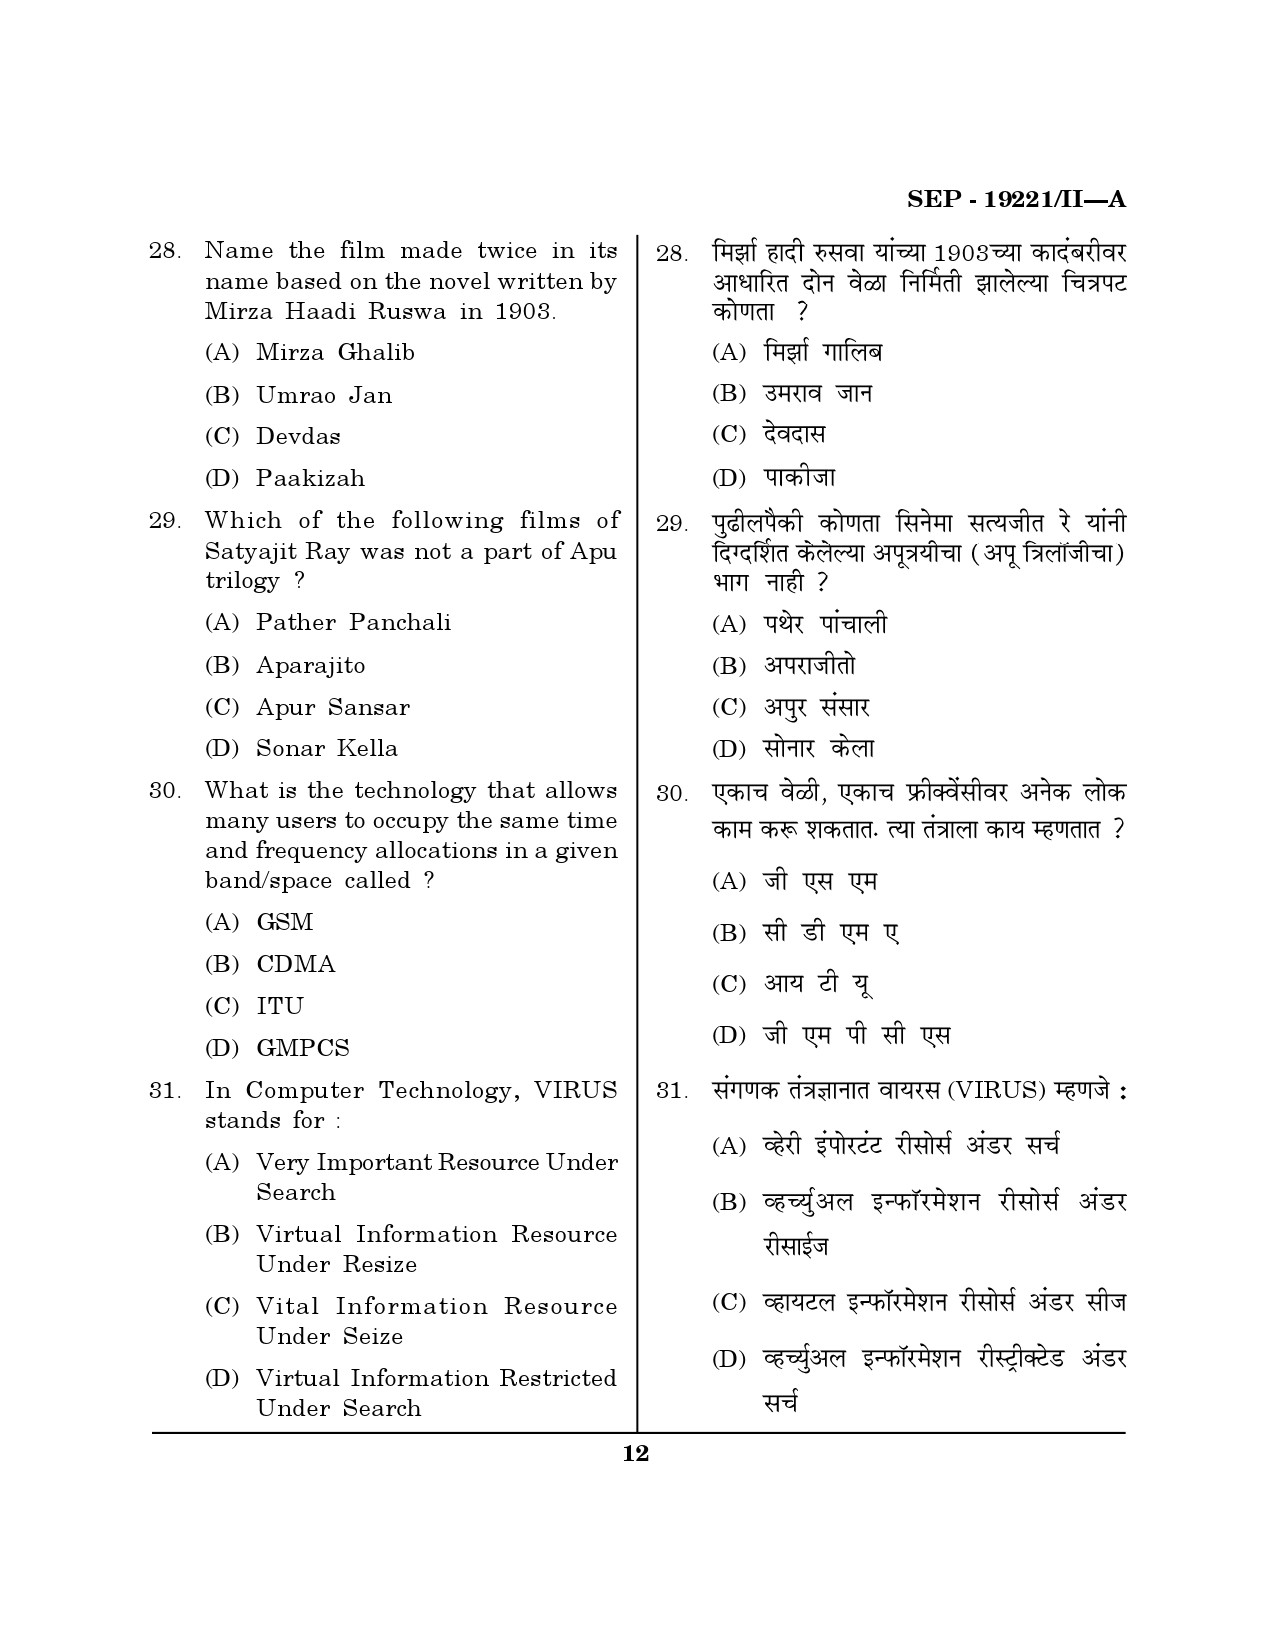 Maharashtra SET Journalism and Mass Communication Exam Question Paper September 2021 11